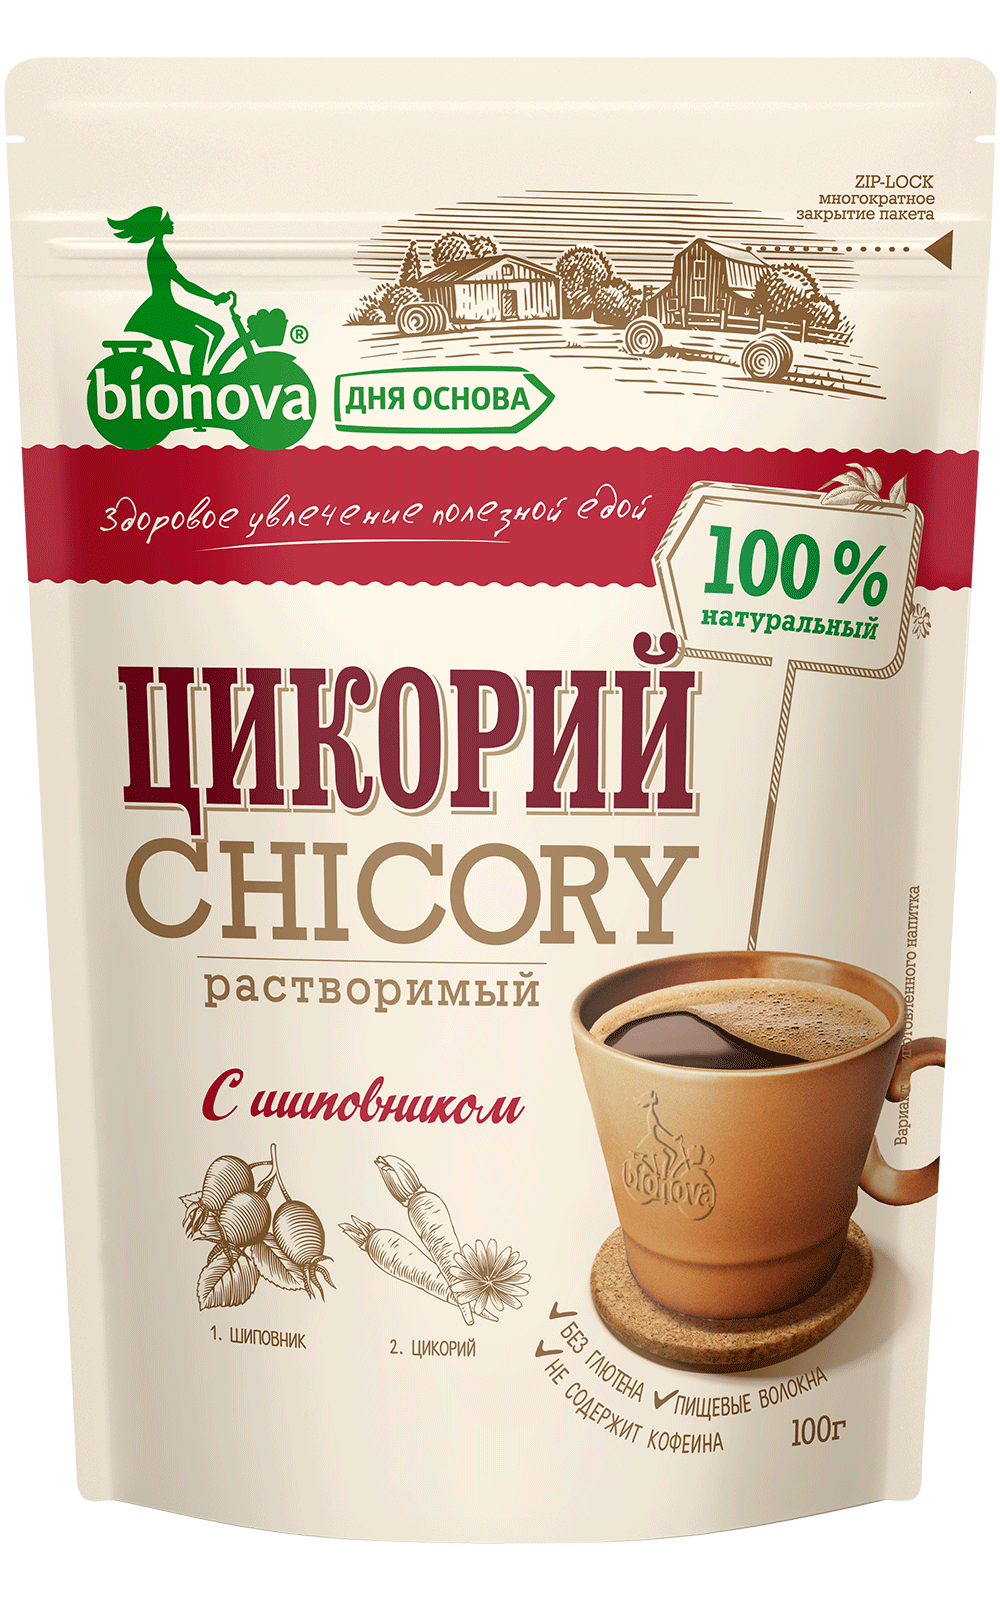 Soluble сhicory Bionova® with rosehip extract 100g